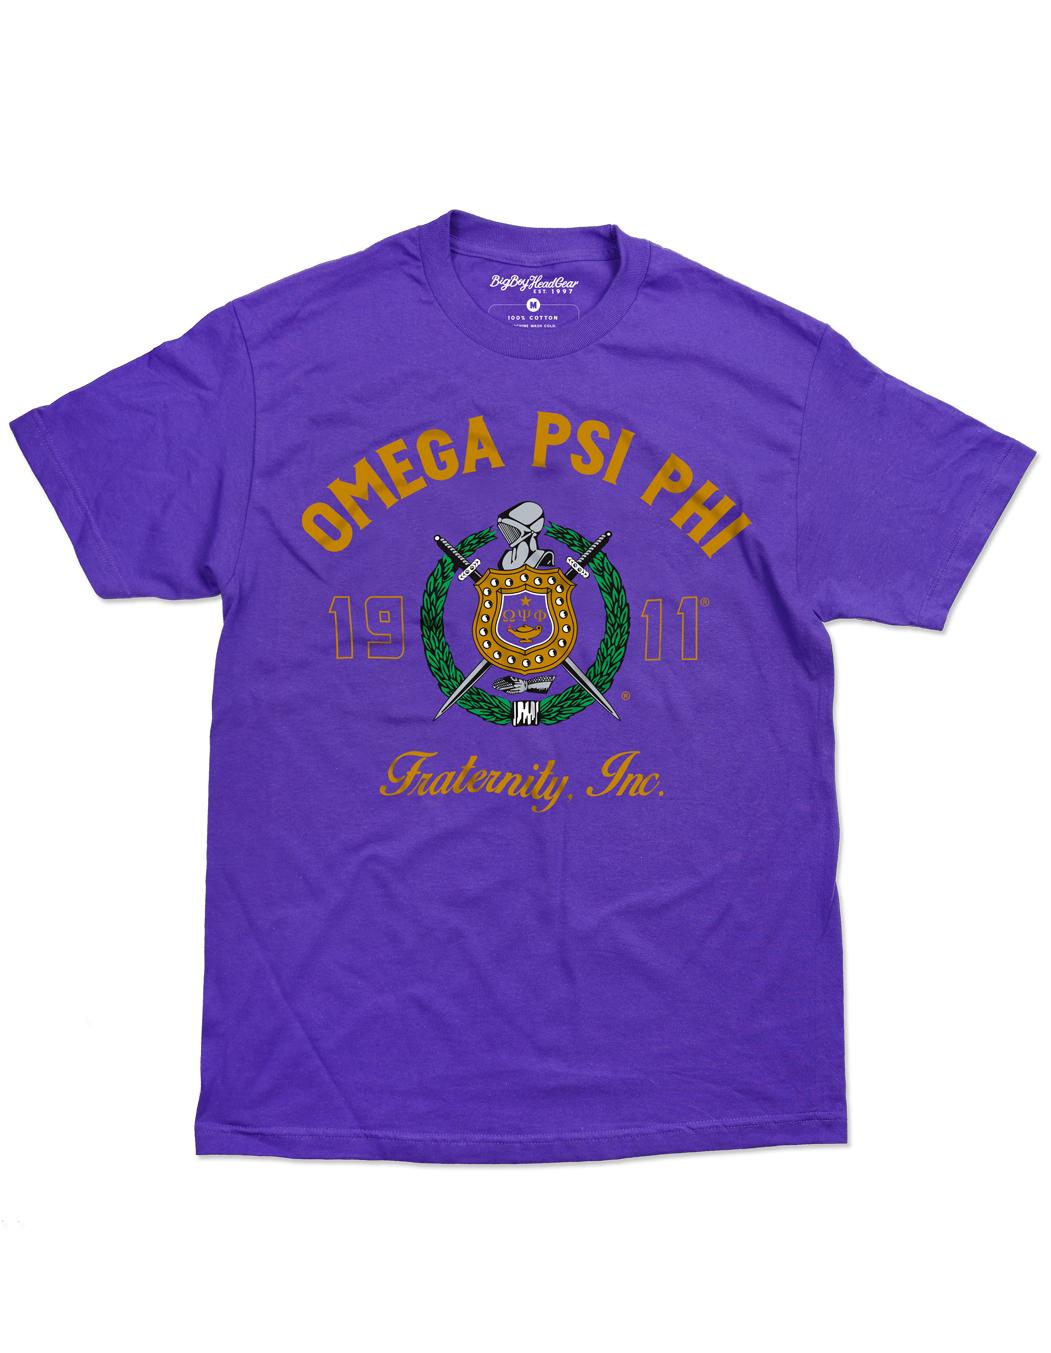 Omega Psi Phi apparel Graphic T Shirt